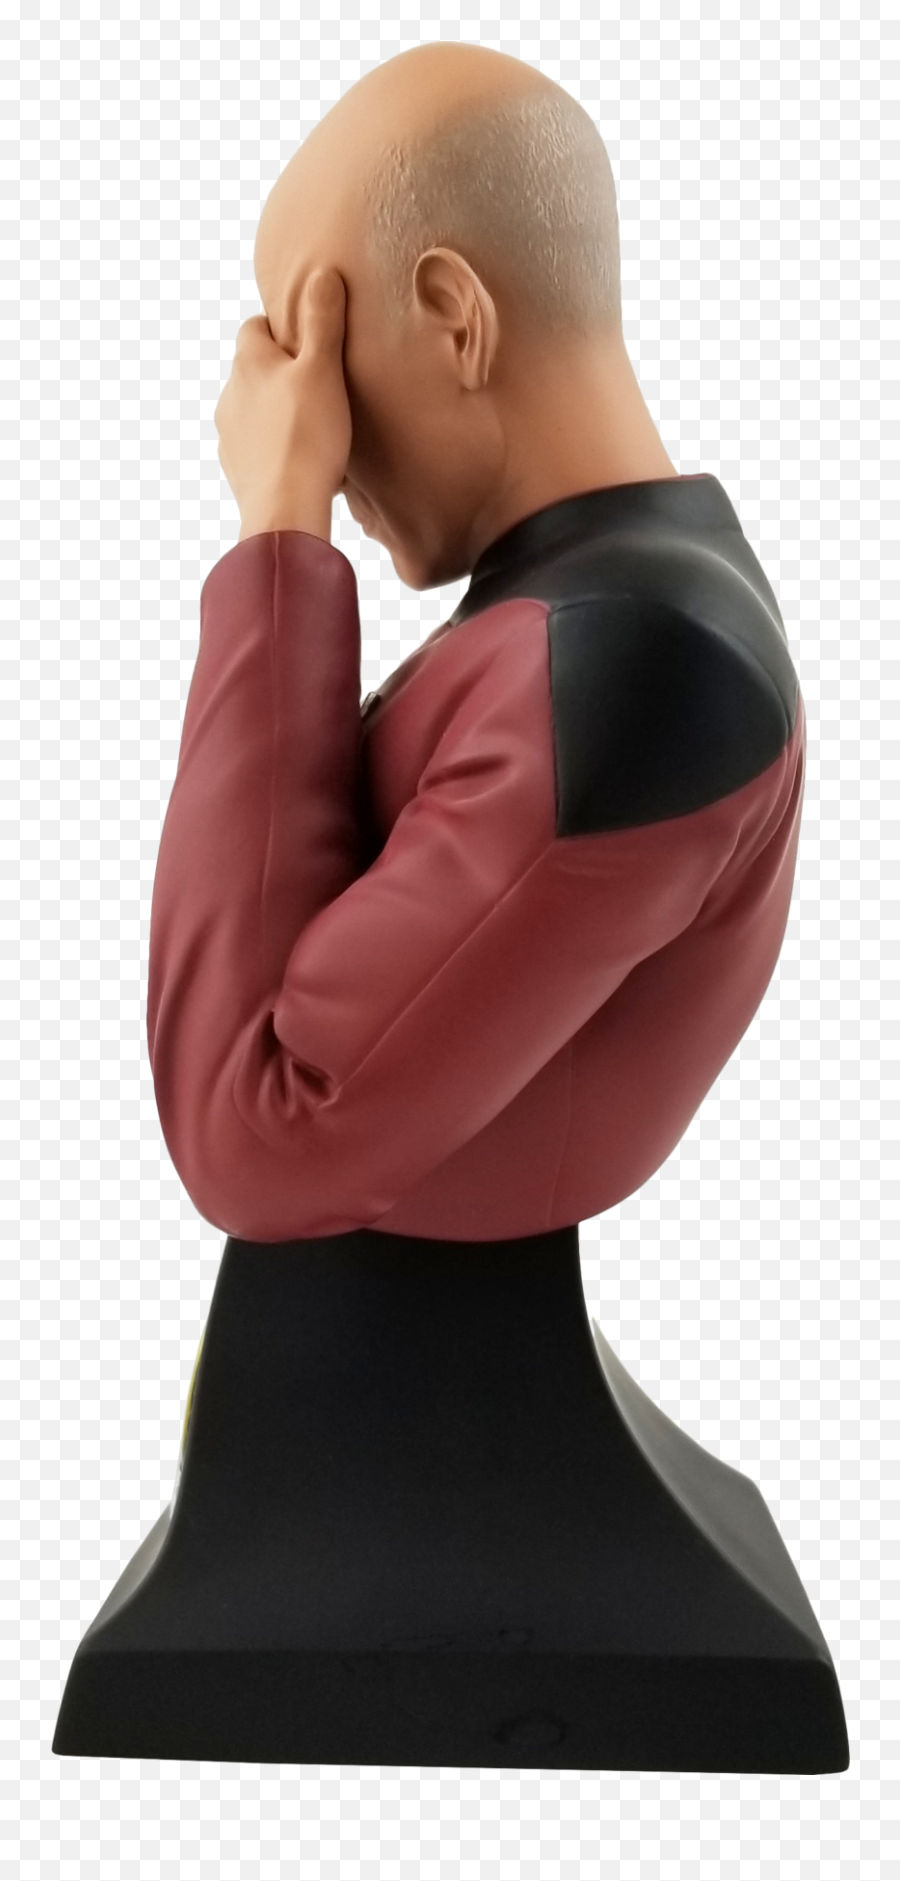 Star Trek Facepalm Png The Next Generation Captain Picard - Captain Picard Facepalm Mini Bust Emoji,Funny Star Trek Emojis